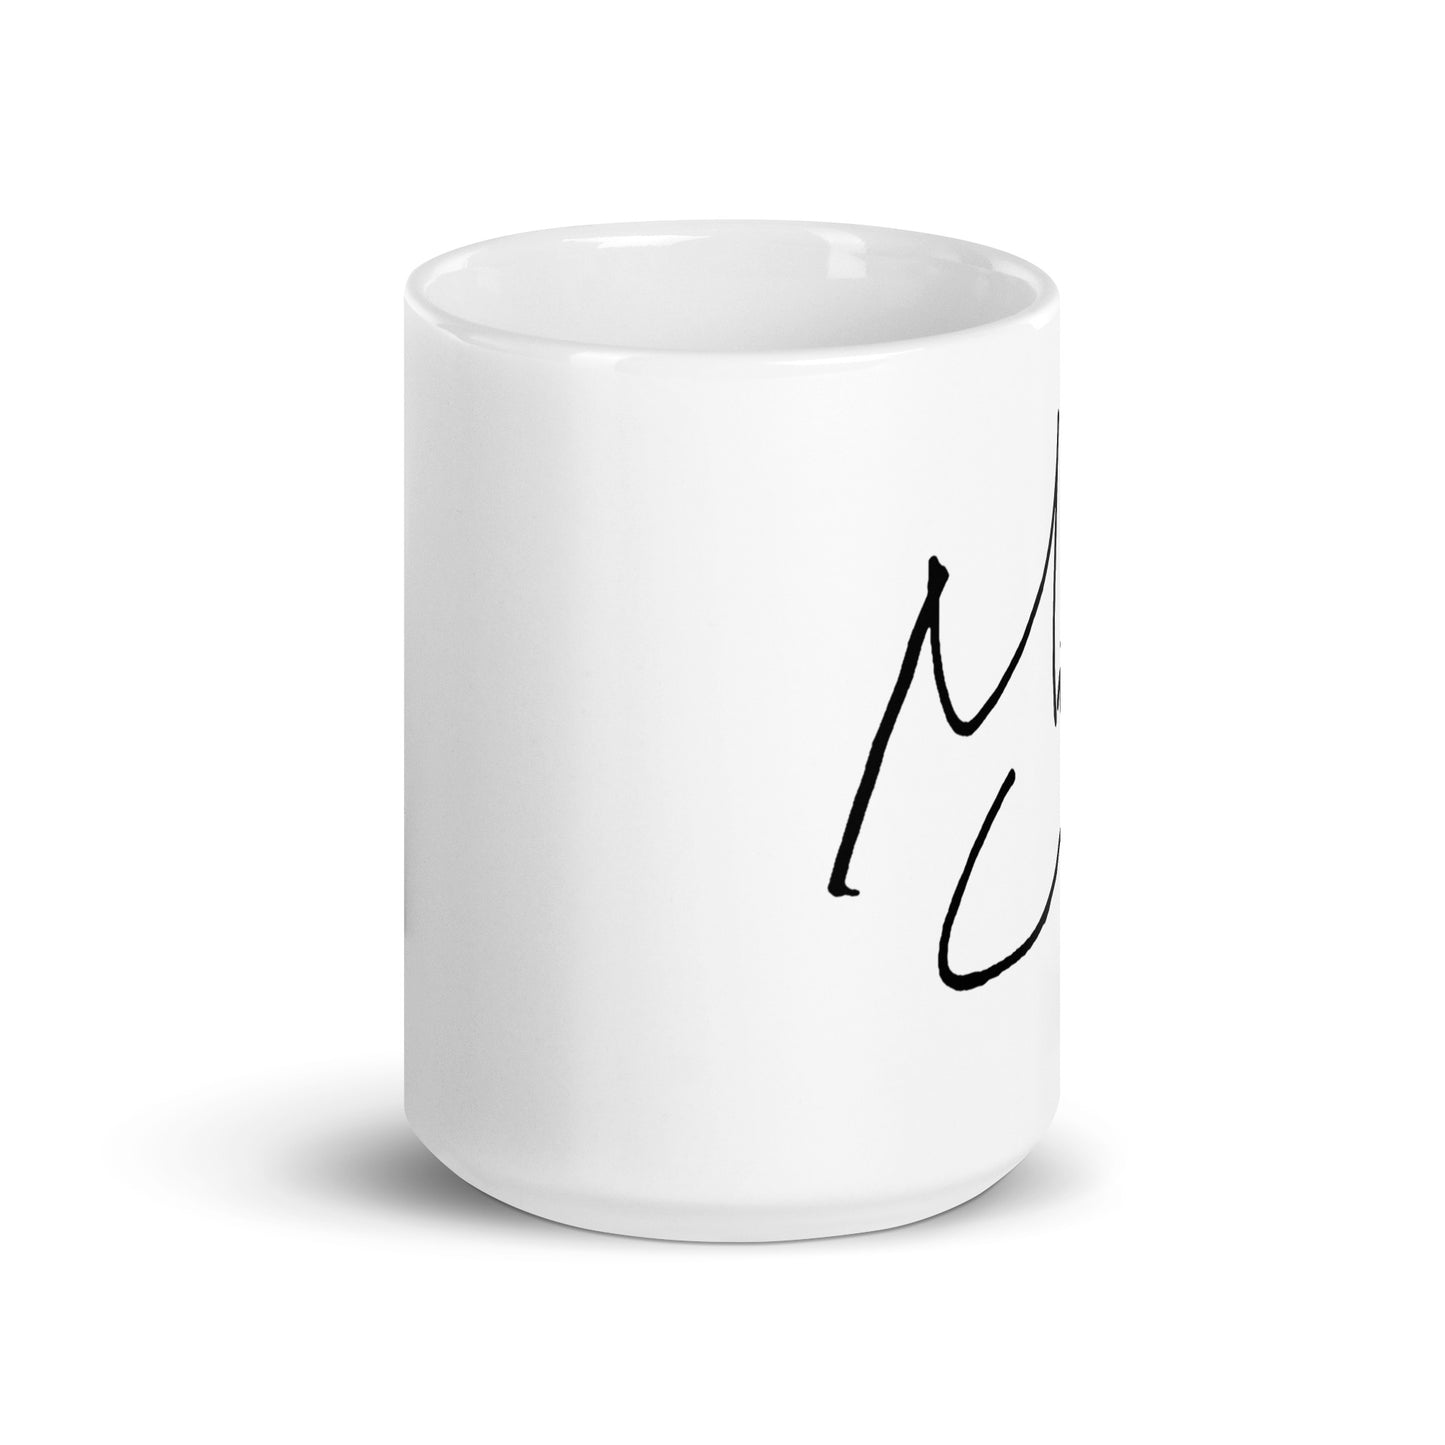 SEVENTEEN Mingyu, Kim Mingyu Signature Ceramic Mug